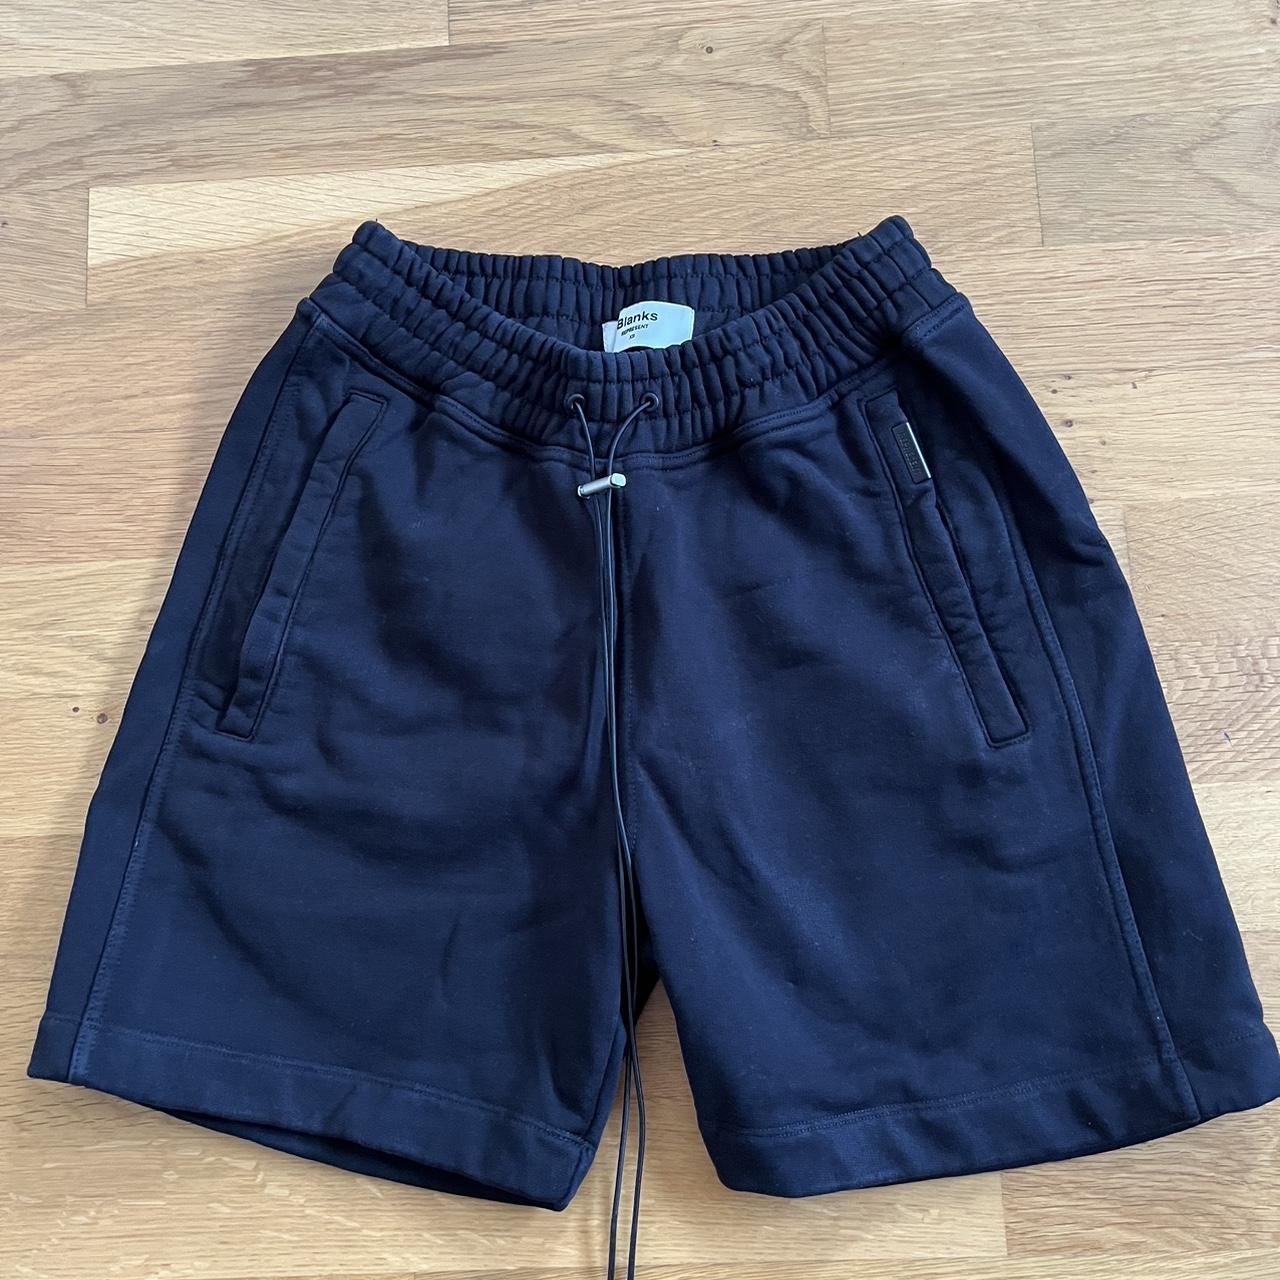 Represent Blanks shorts Black / size XS ⭐️like new -... - Depop